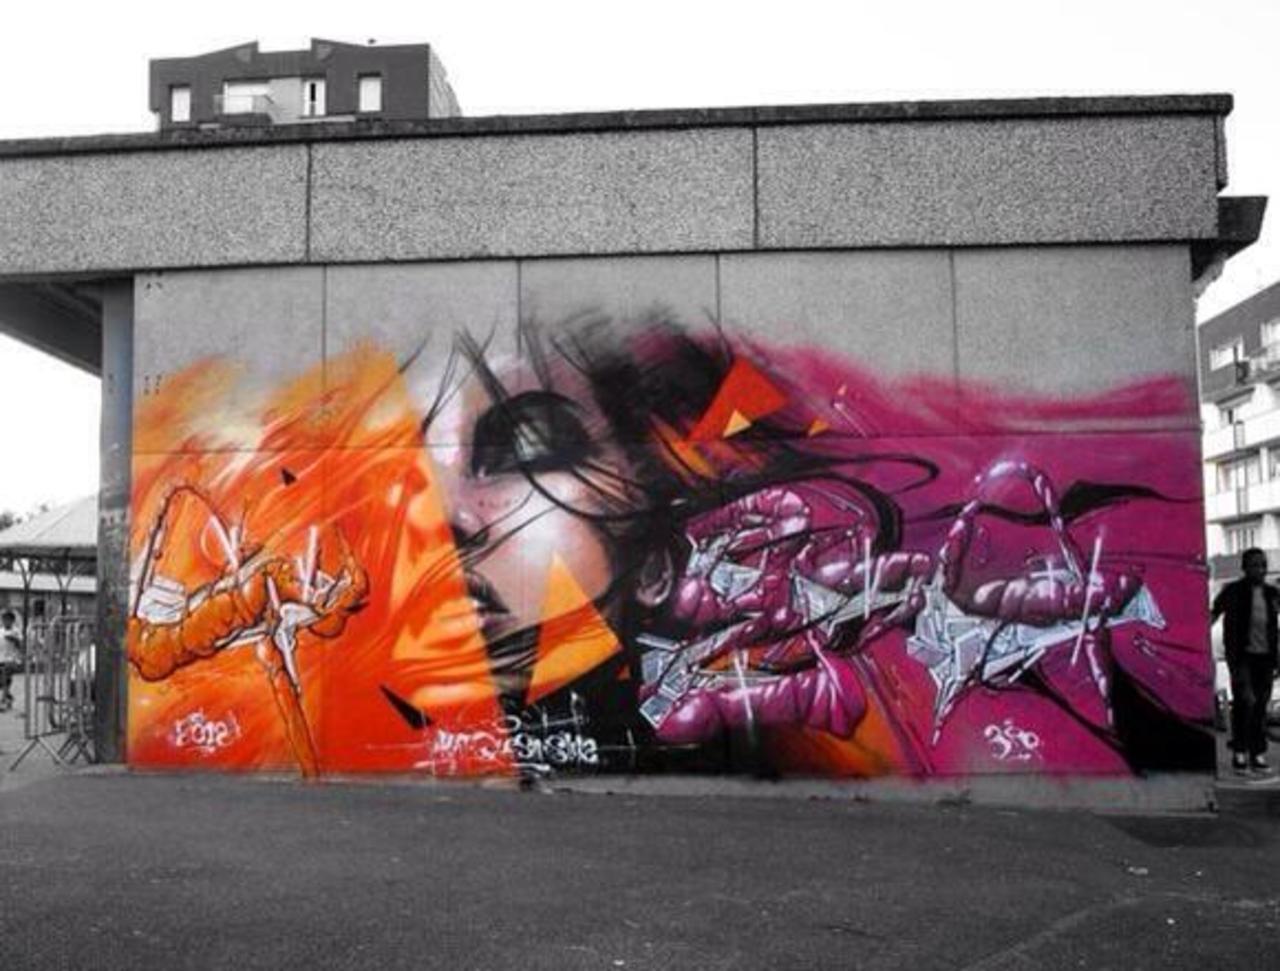 Colab of Sly2, Kat, Quesa Street Art wall in Paris, France #art #mural #graffiti #streetart http://t.co/emc5TlMmCC